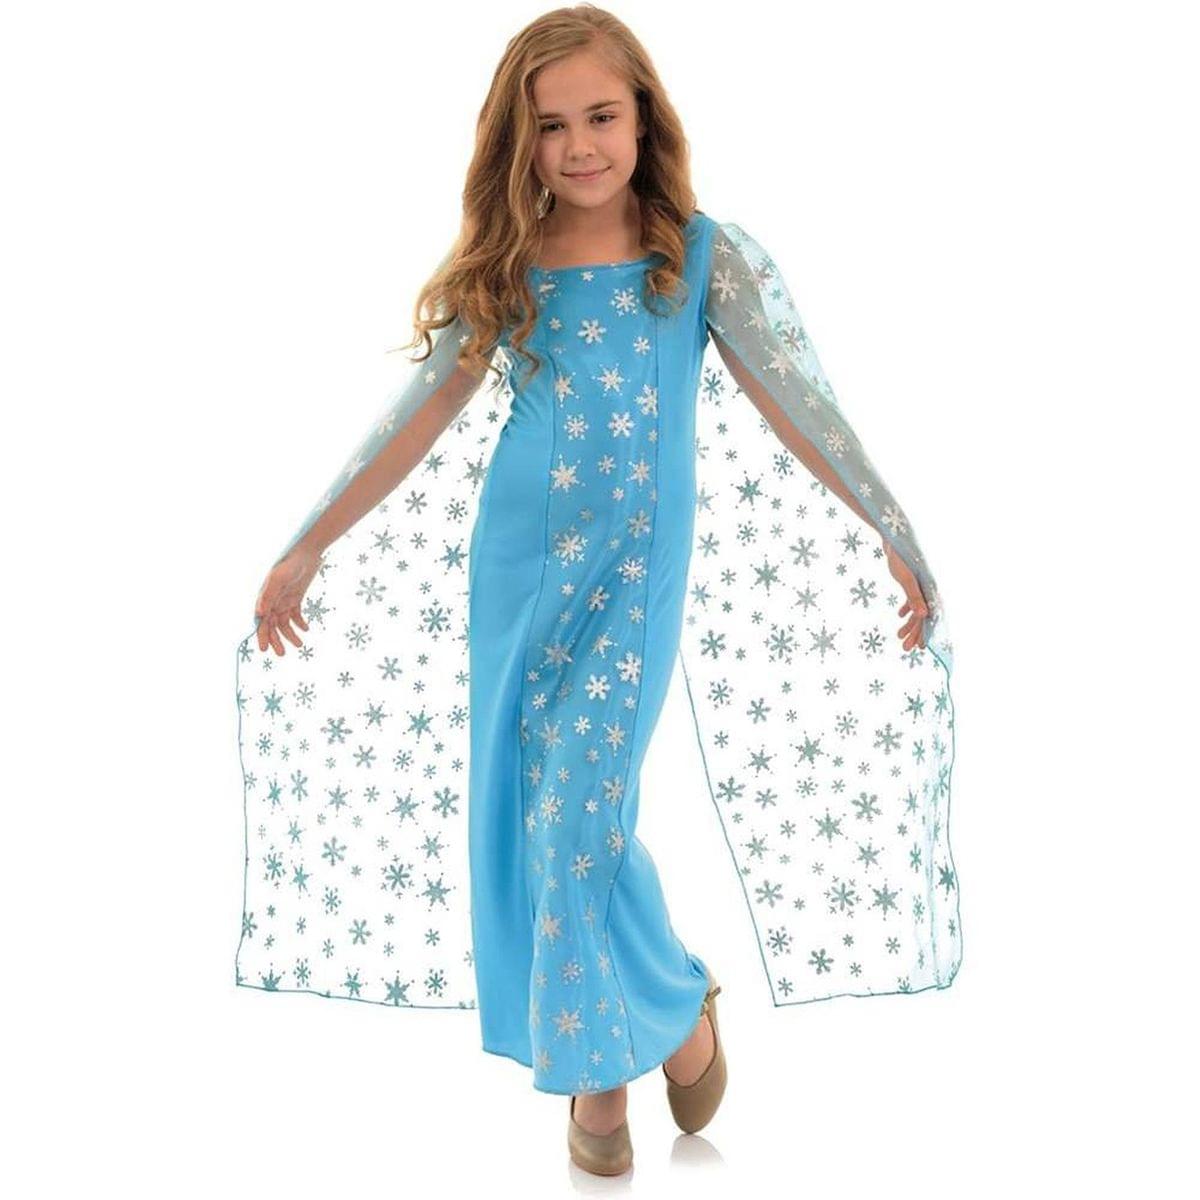 Snow Queen Snowflake Child Costume Dress